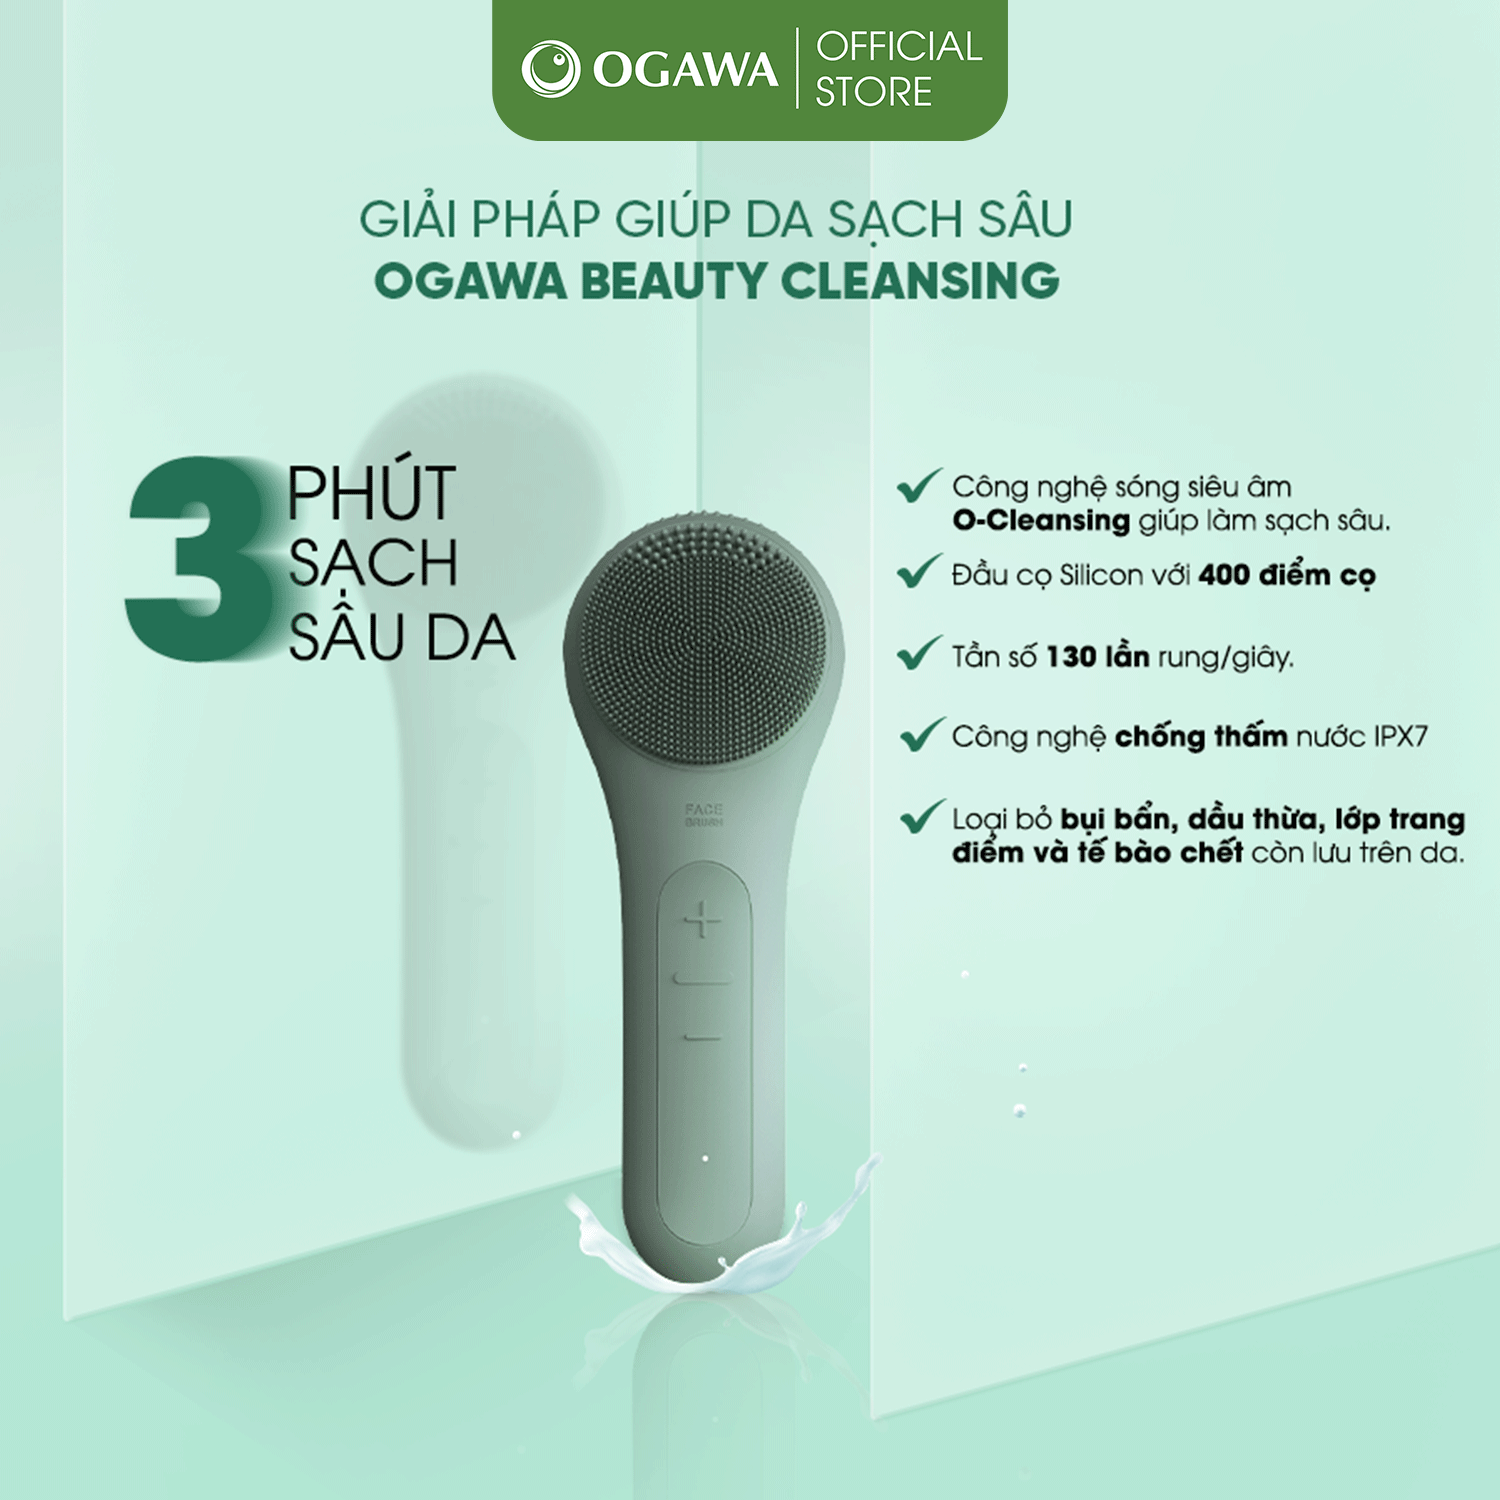 Máy rửa mặt Siêu âm OGAWA Beauty Cleansing